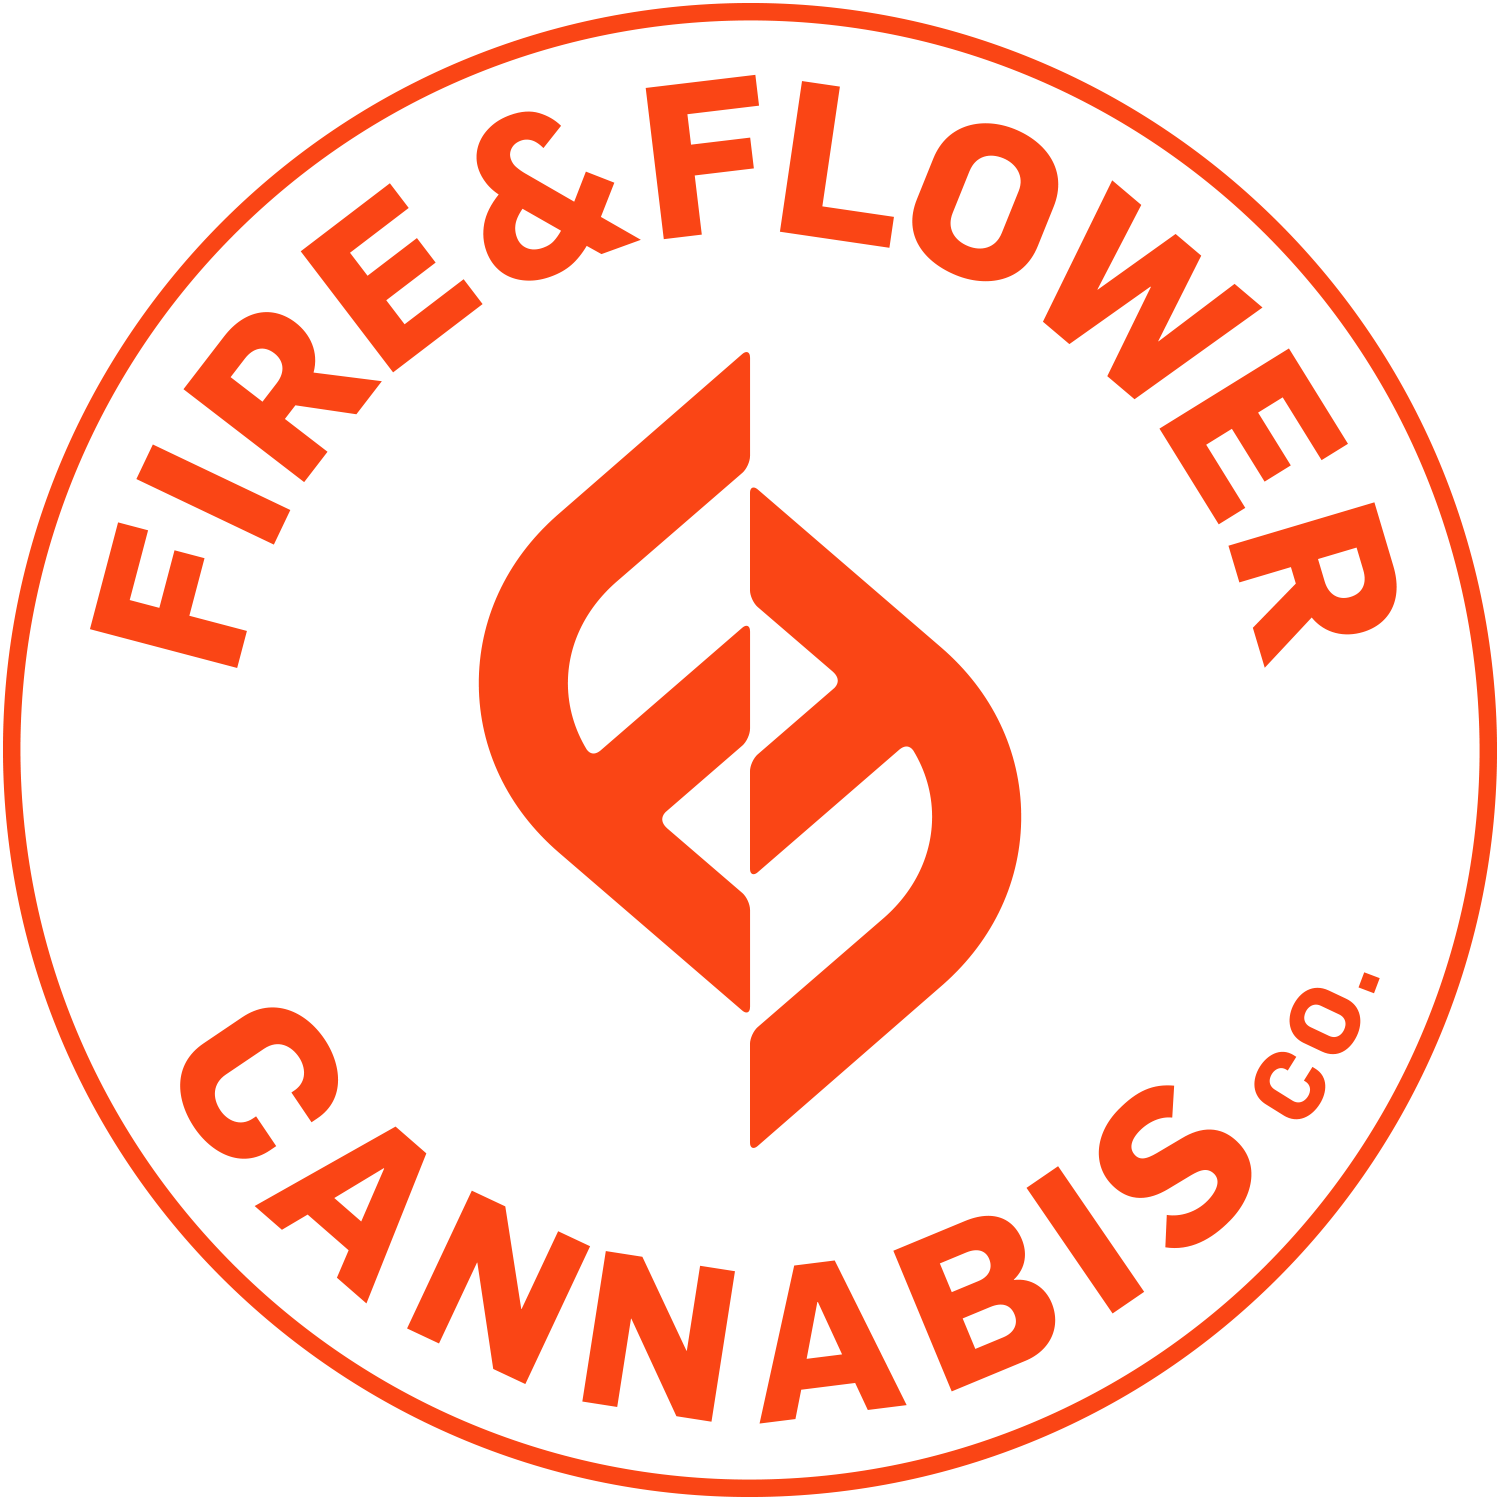 Fire & Flower Cannabis Co. - 129 York Street - Store - tolktalk